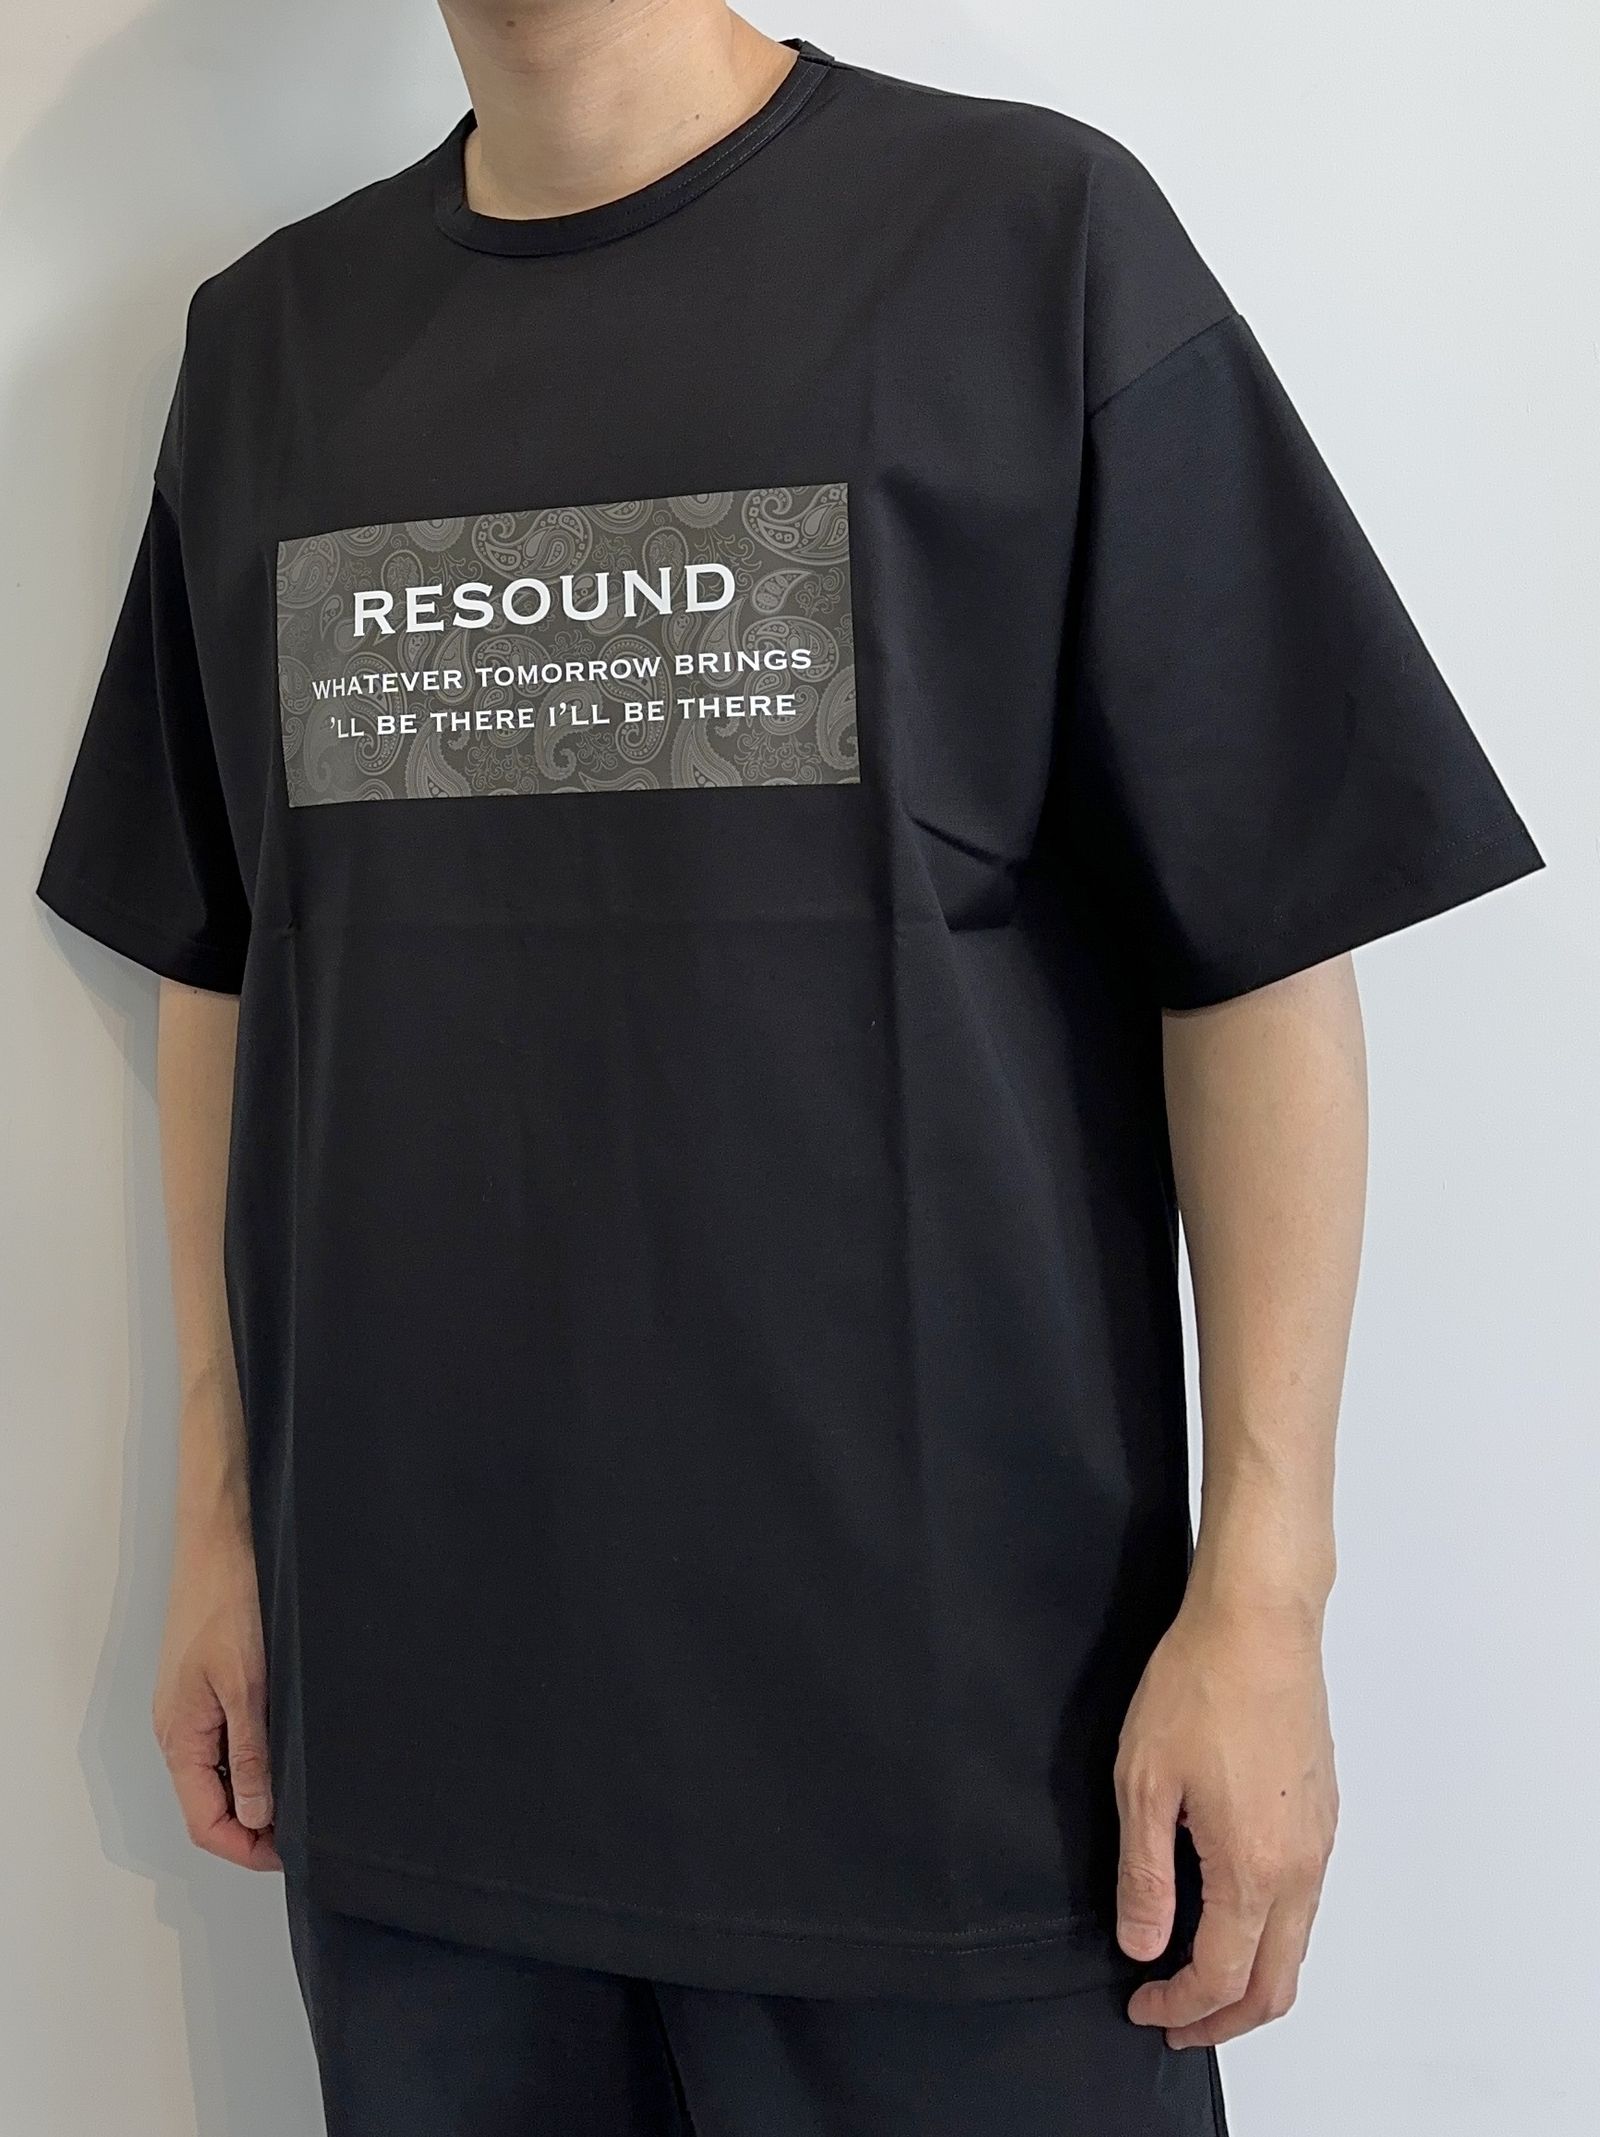 RESOUND CLOTHING - リサウンドクロージング | 正規通販 LUKE(ルーク)